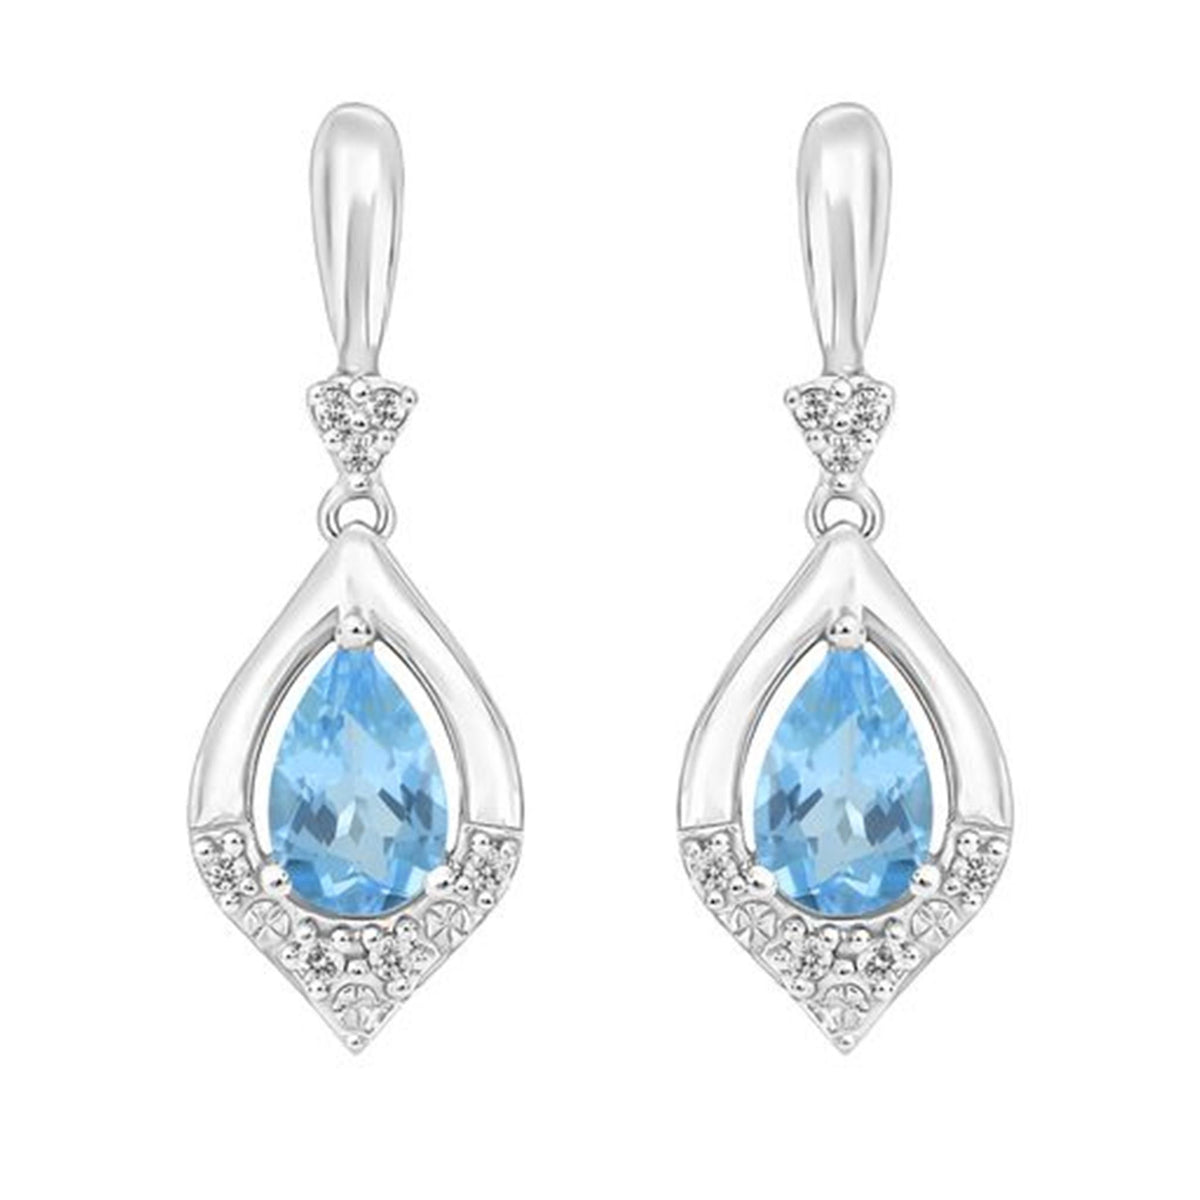 14Kt White Gold Dangle Earrings Gemstone Earrings With 0.92ct Blue Topaz